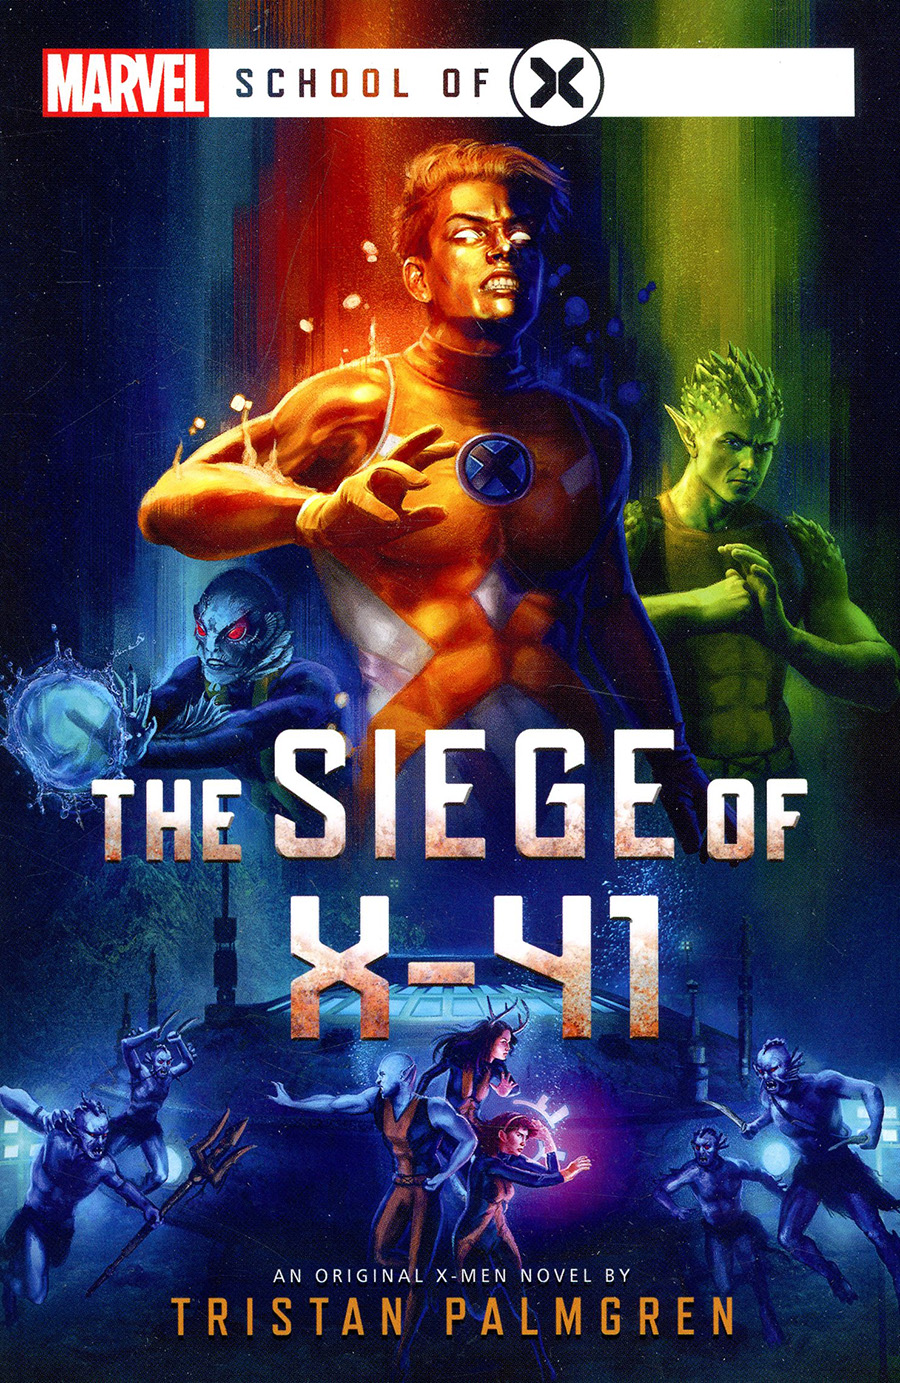 Marvel School Of X Siege Of X-41 Novel SC